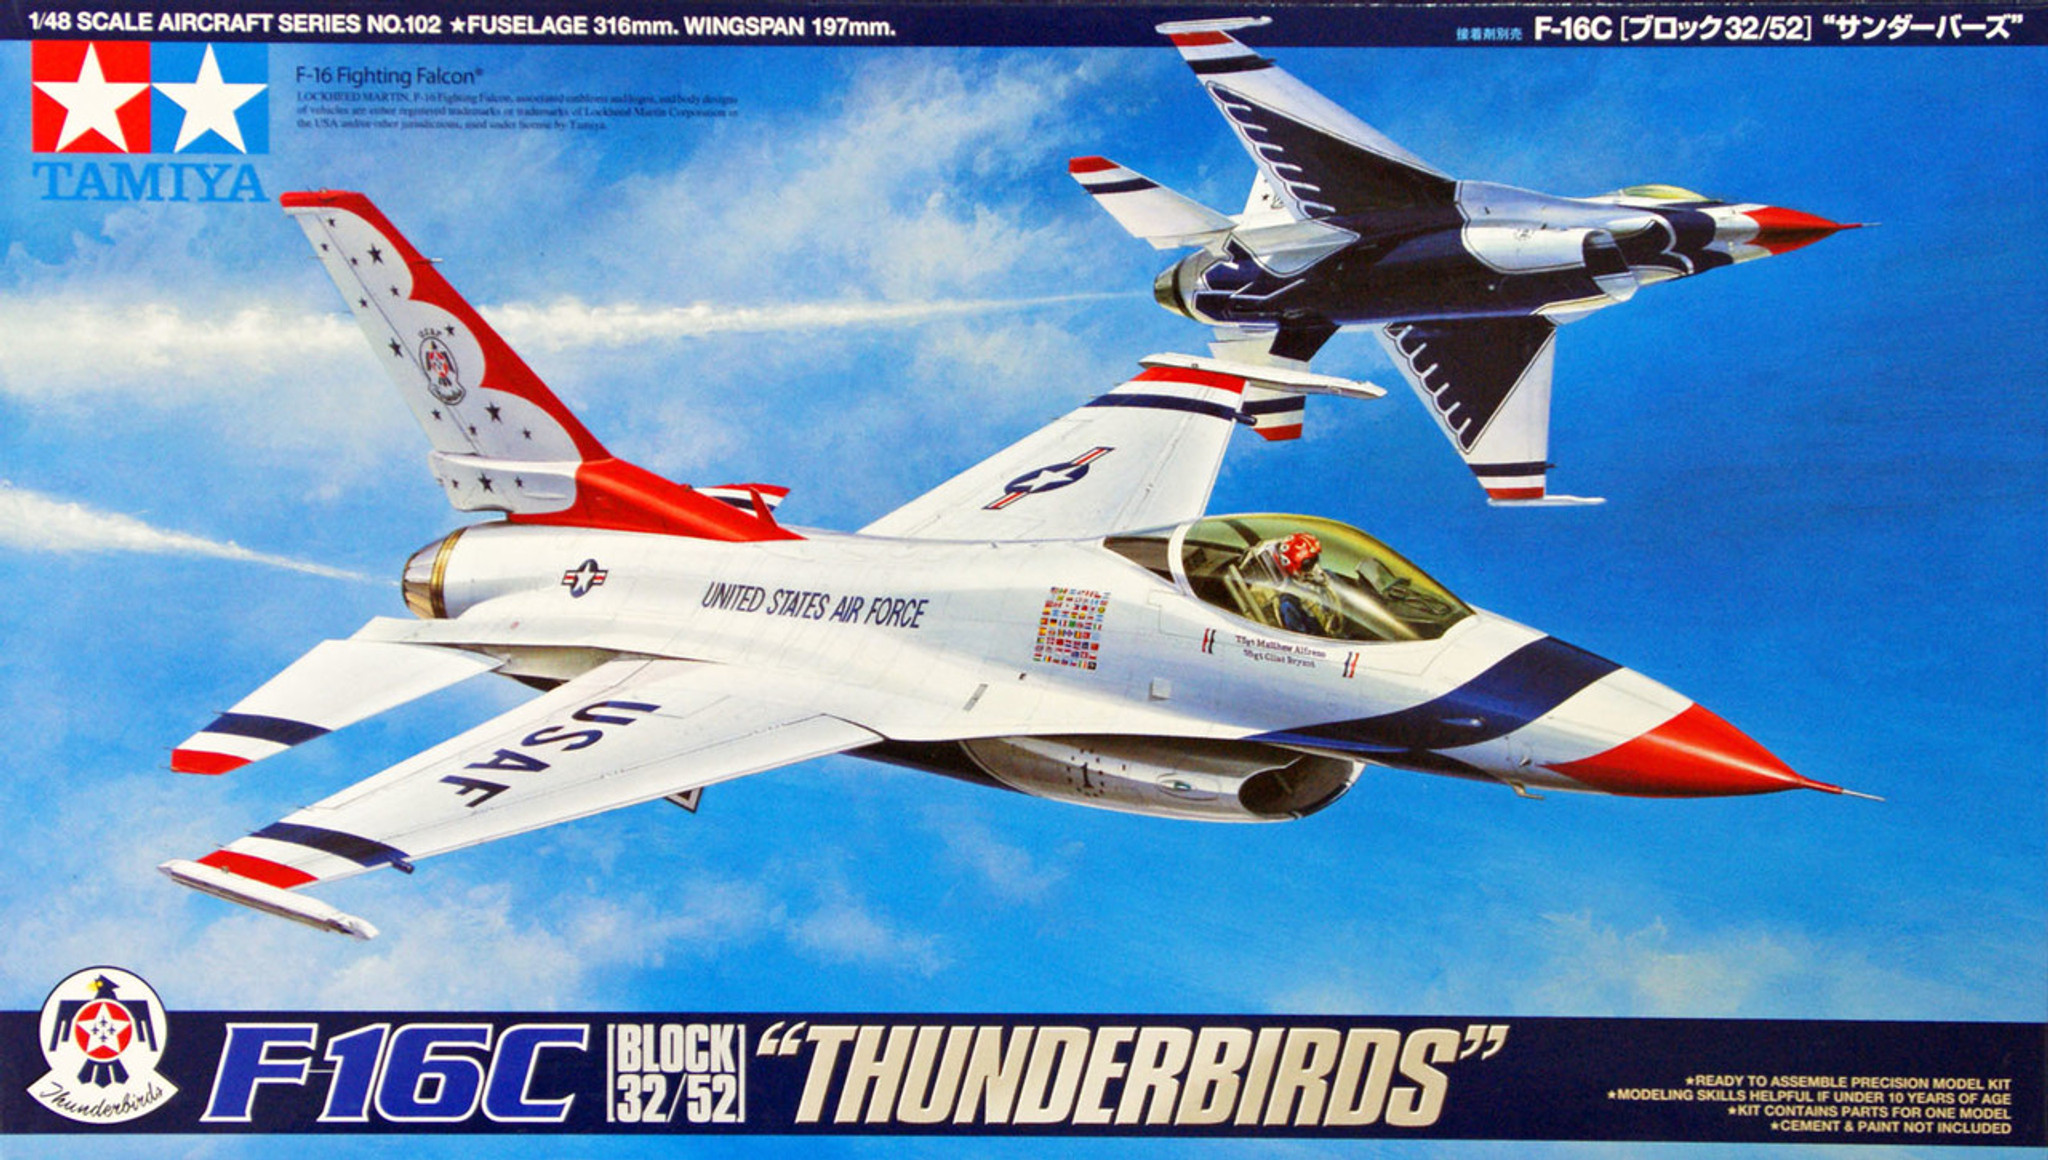 Tamiya 61102 F-16C (Block 32/52) Thunderbirds 1/48 Scale Kit - Plaza Japan
